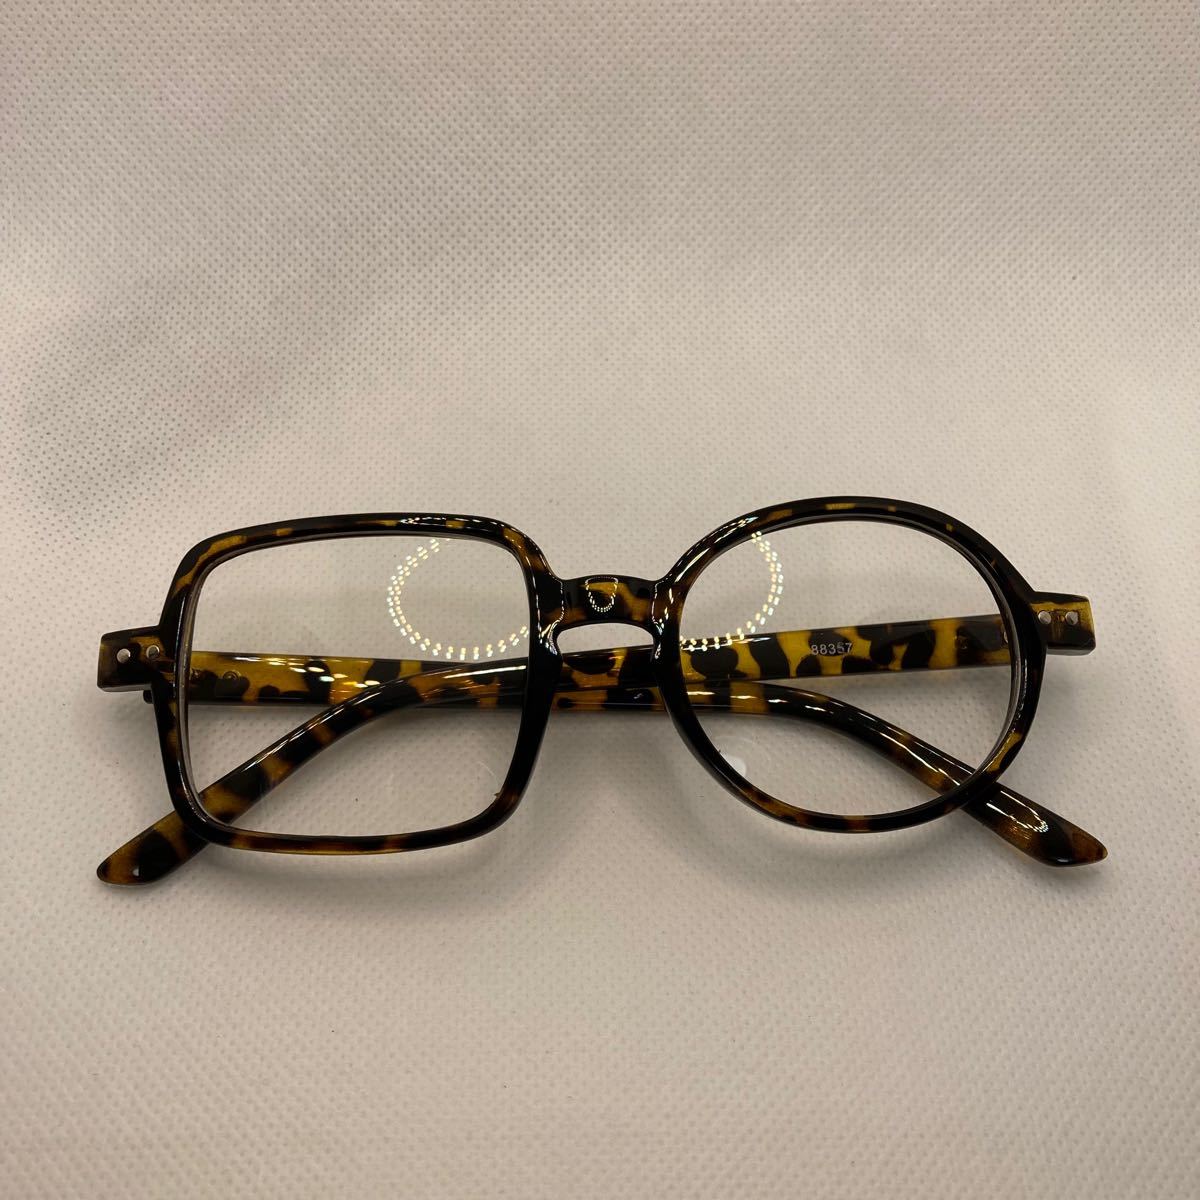 PayPayフリマ｜おしゃれ眼鏡メガネ非対称フレーム個性的デザインサングラス 鼈甲べっ甲ブラウン茶色